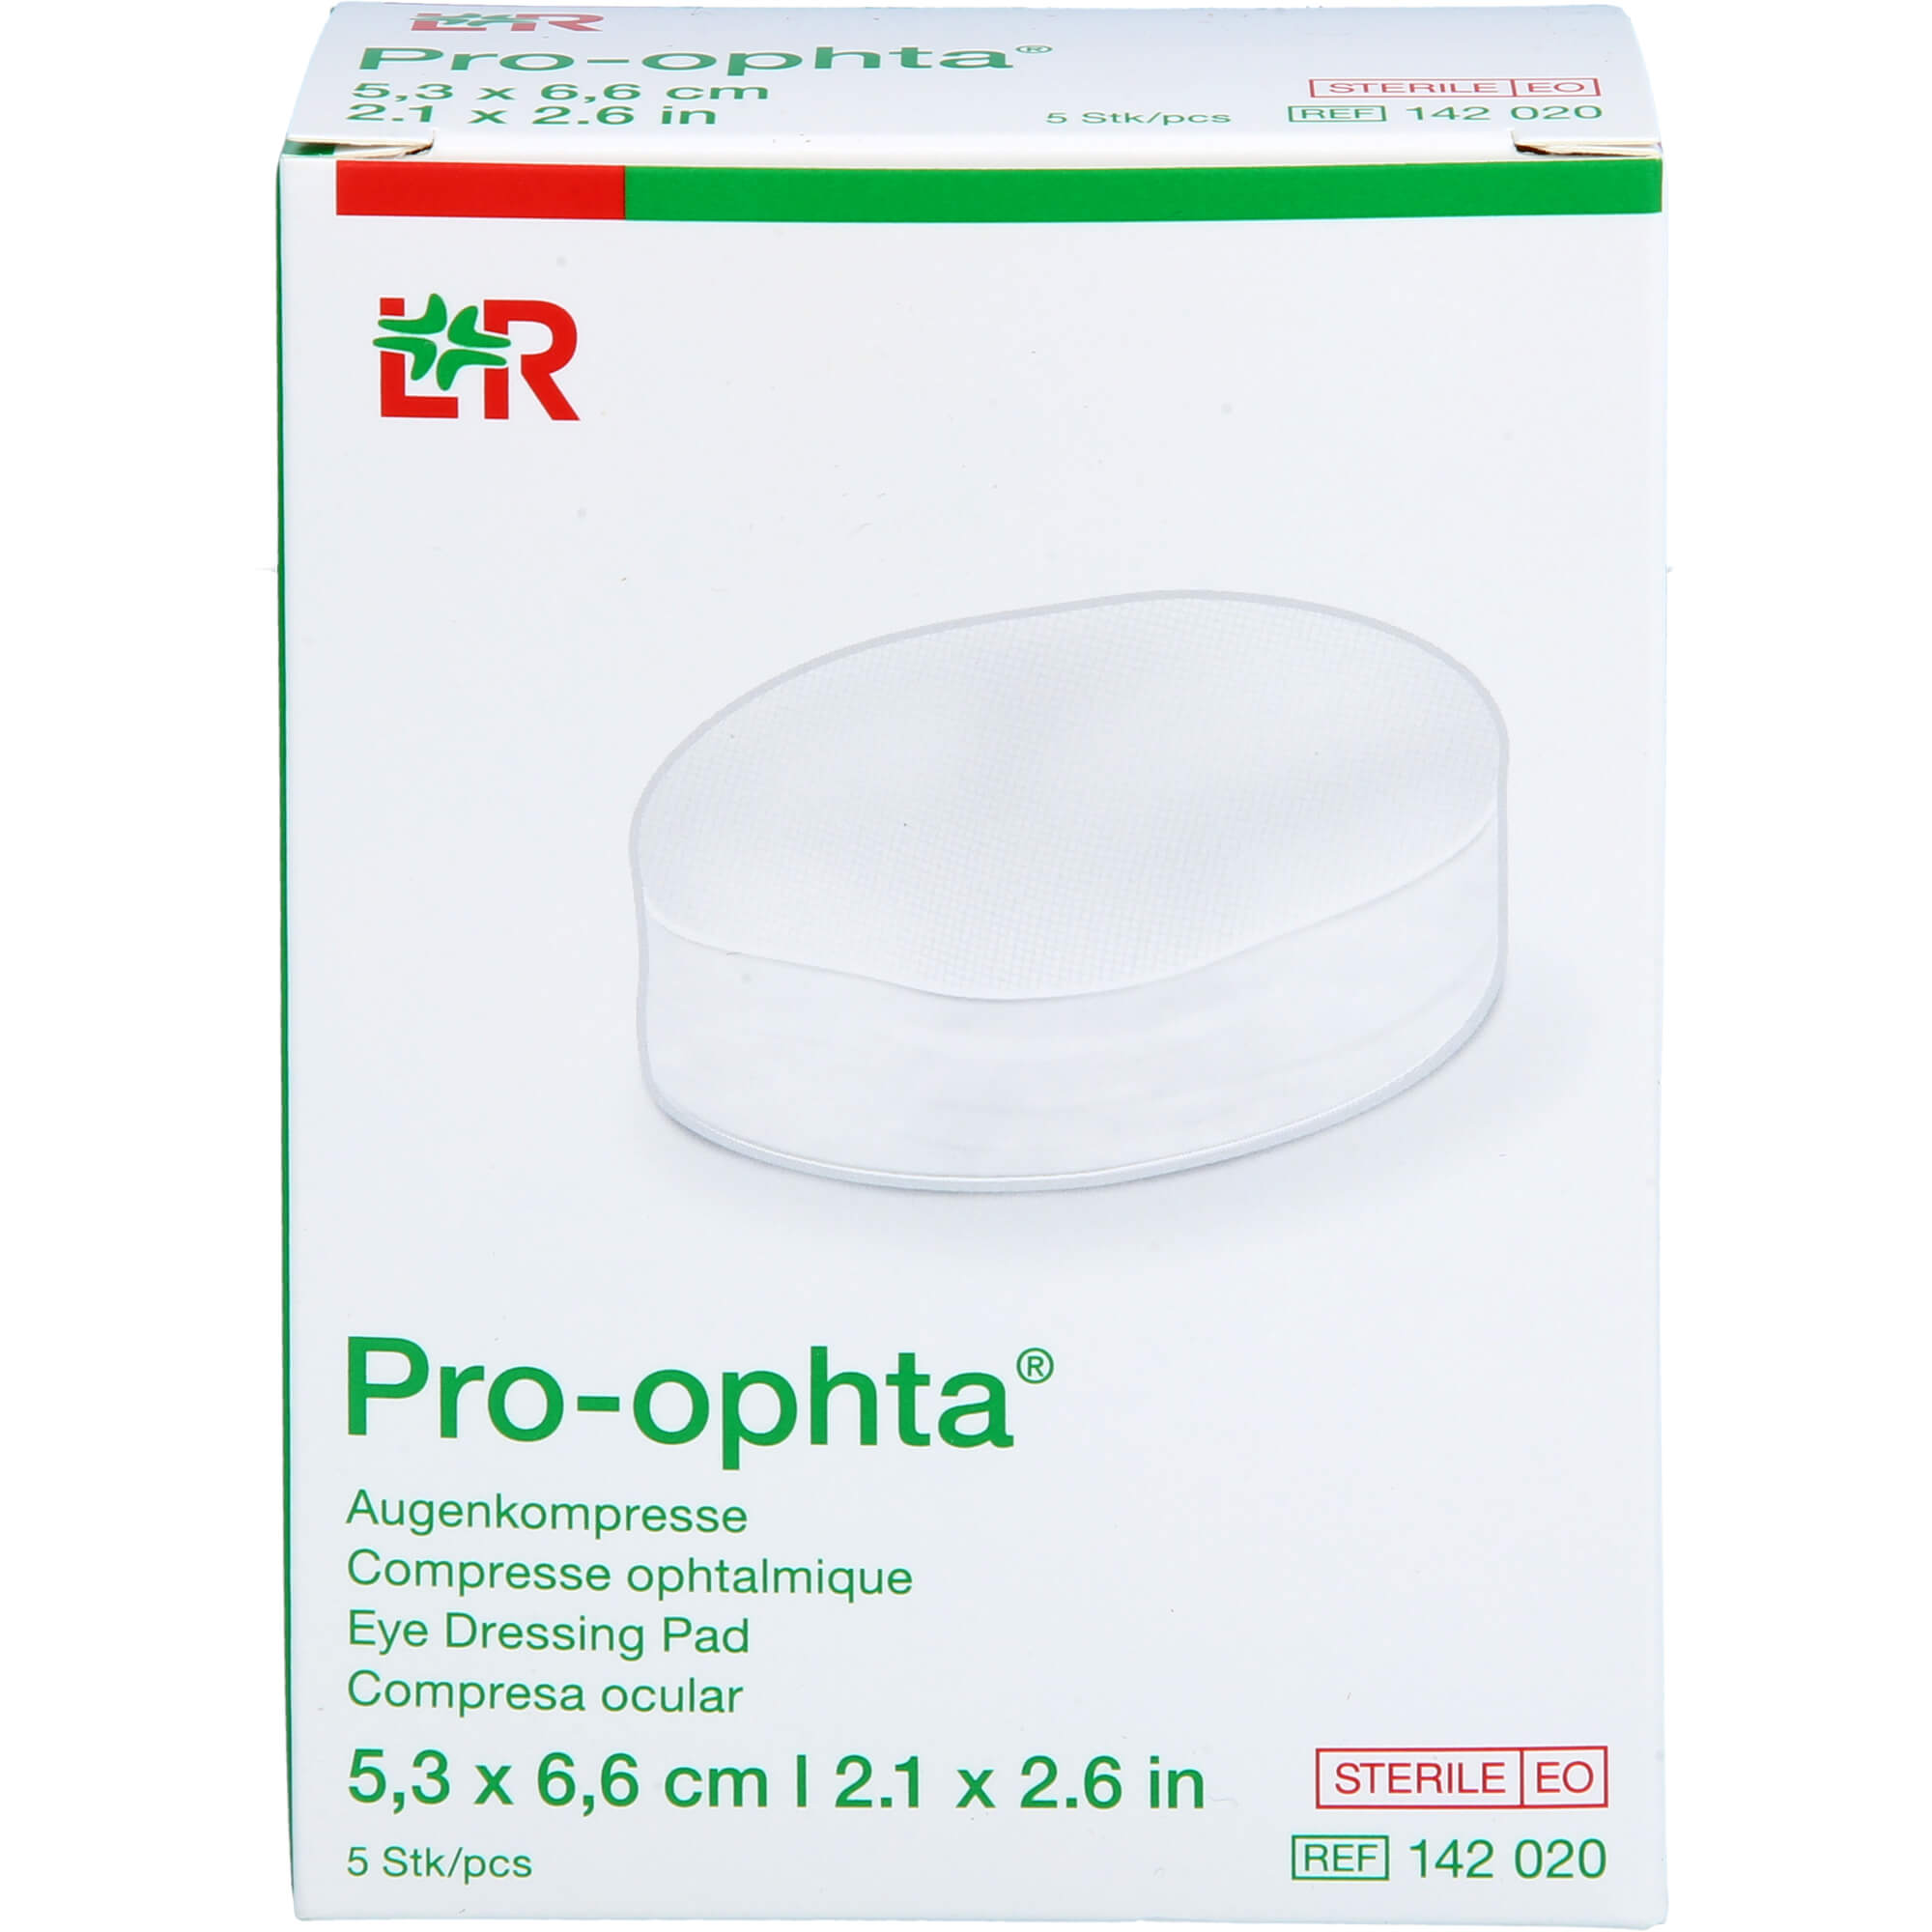 PRO-OPHTA Augenkompresse 5,3x6,6 cm steril